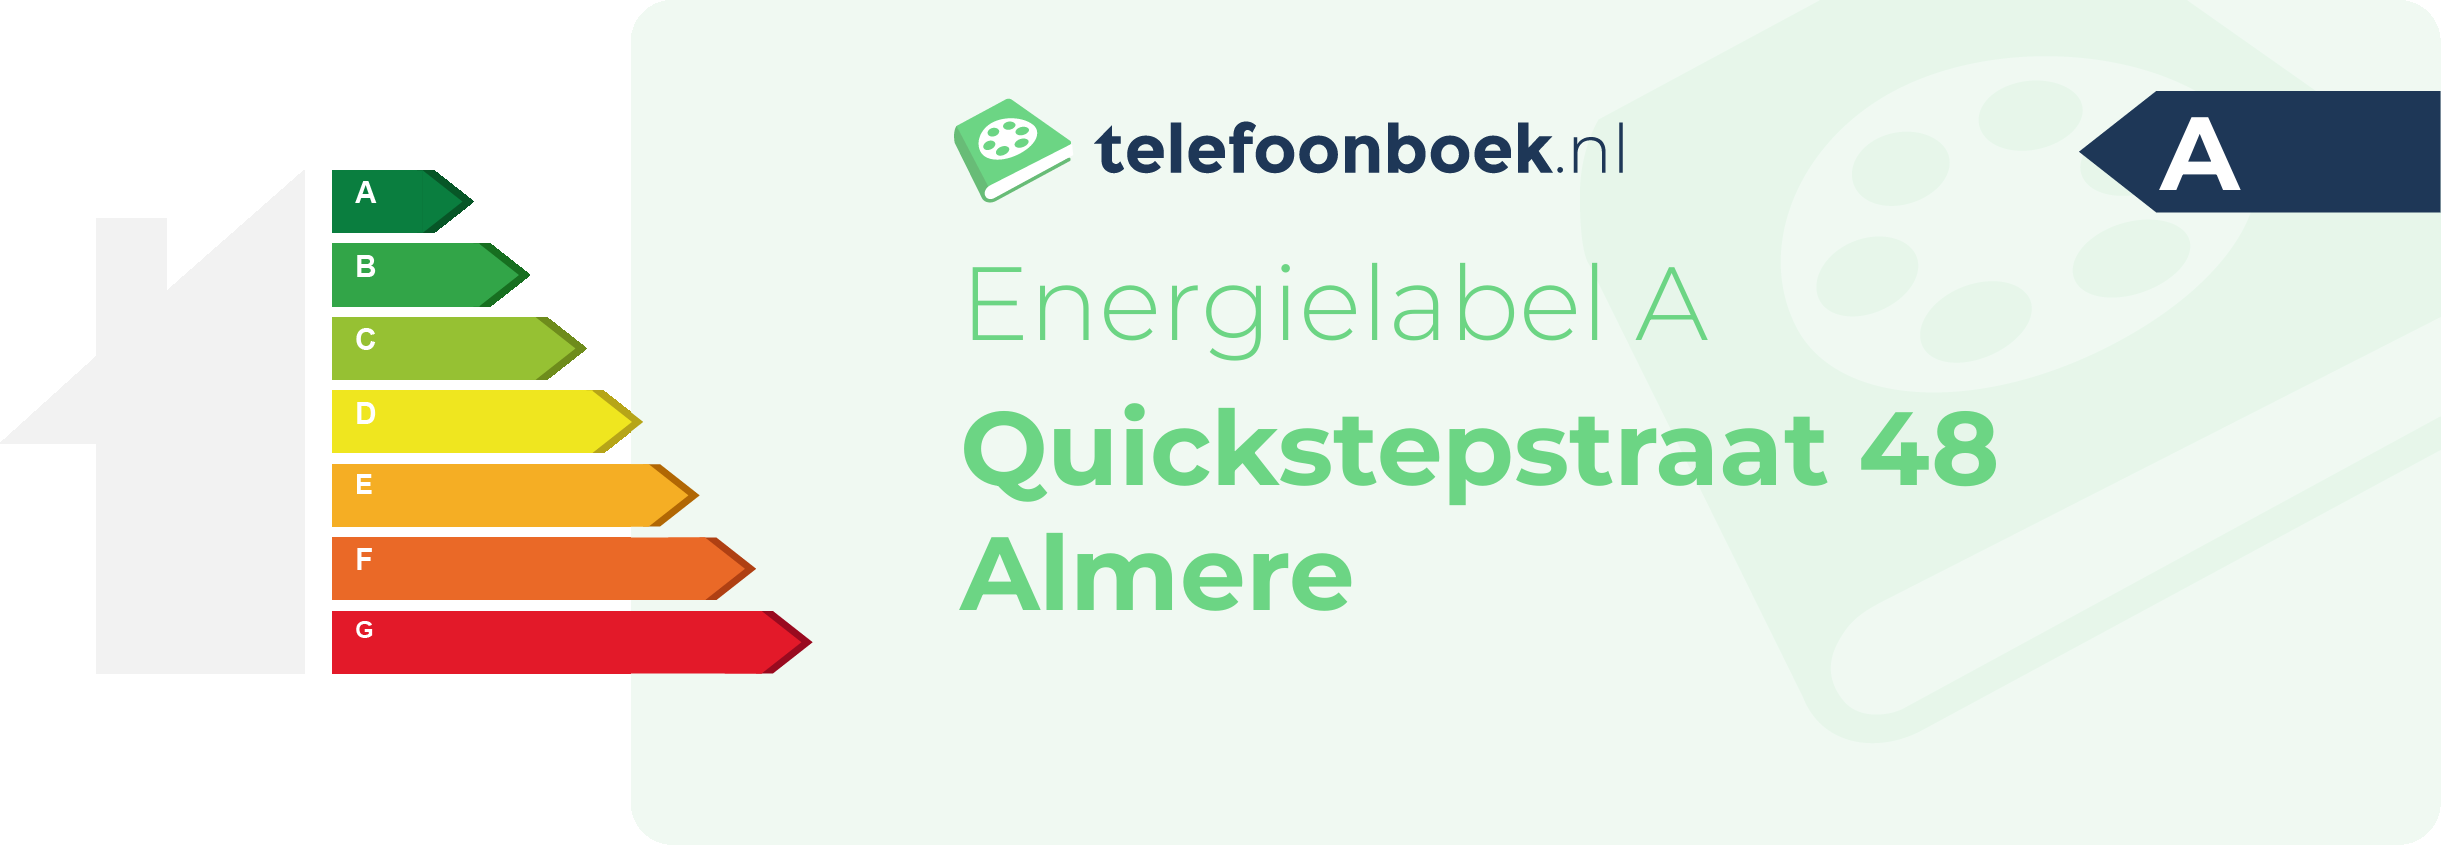 Energielabel Quickstepstraat 48 Almere